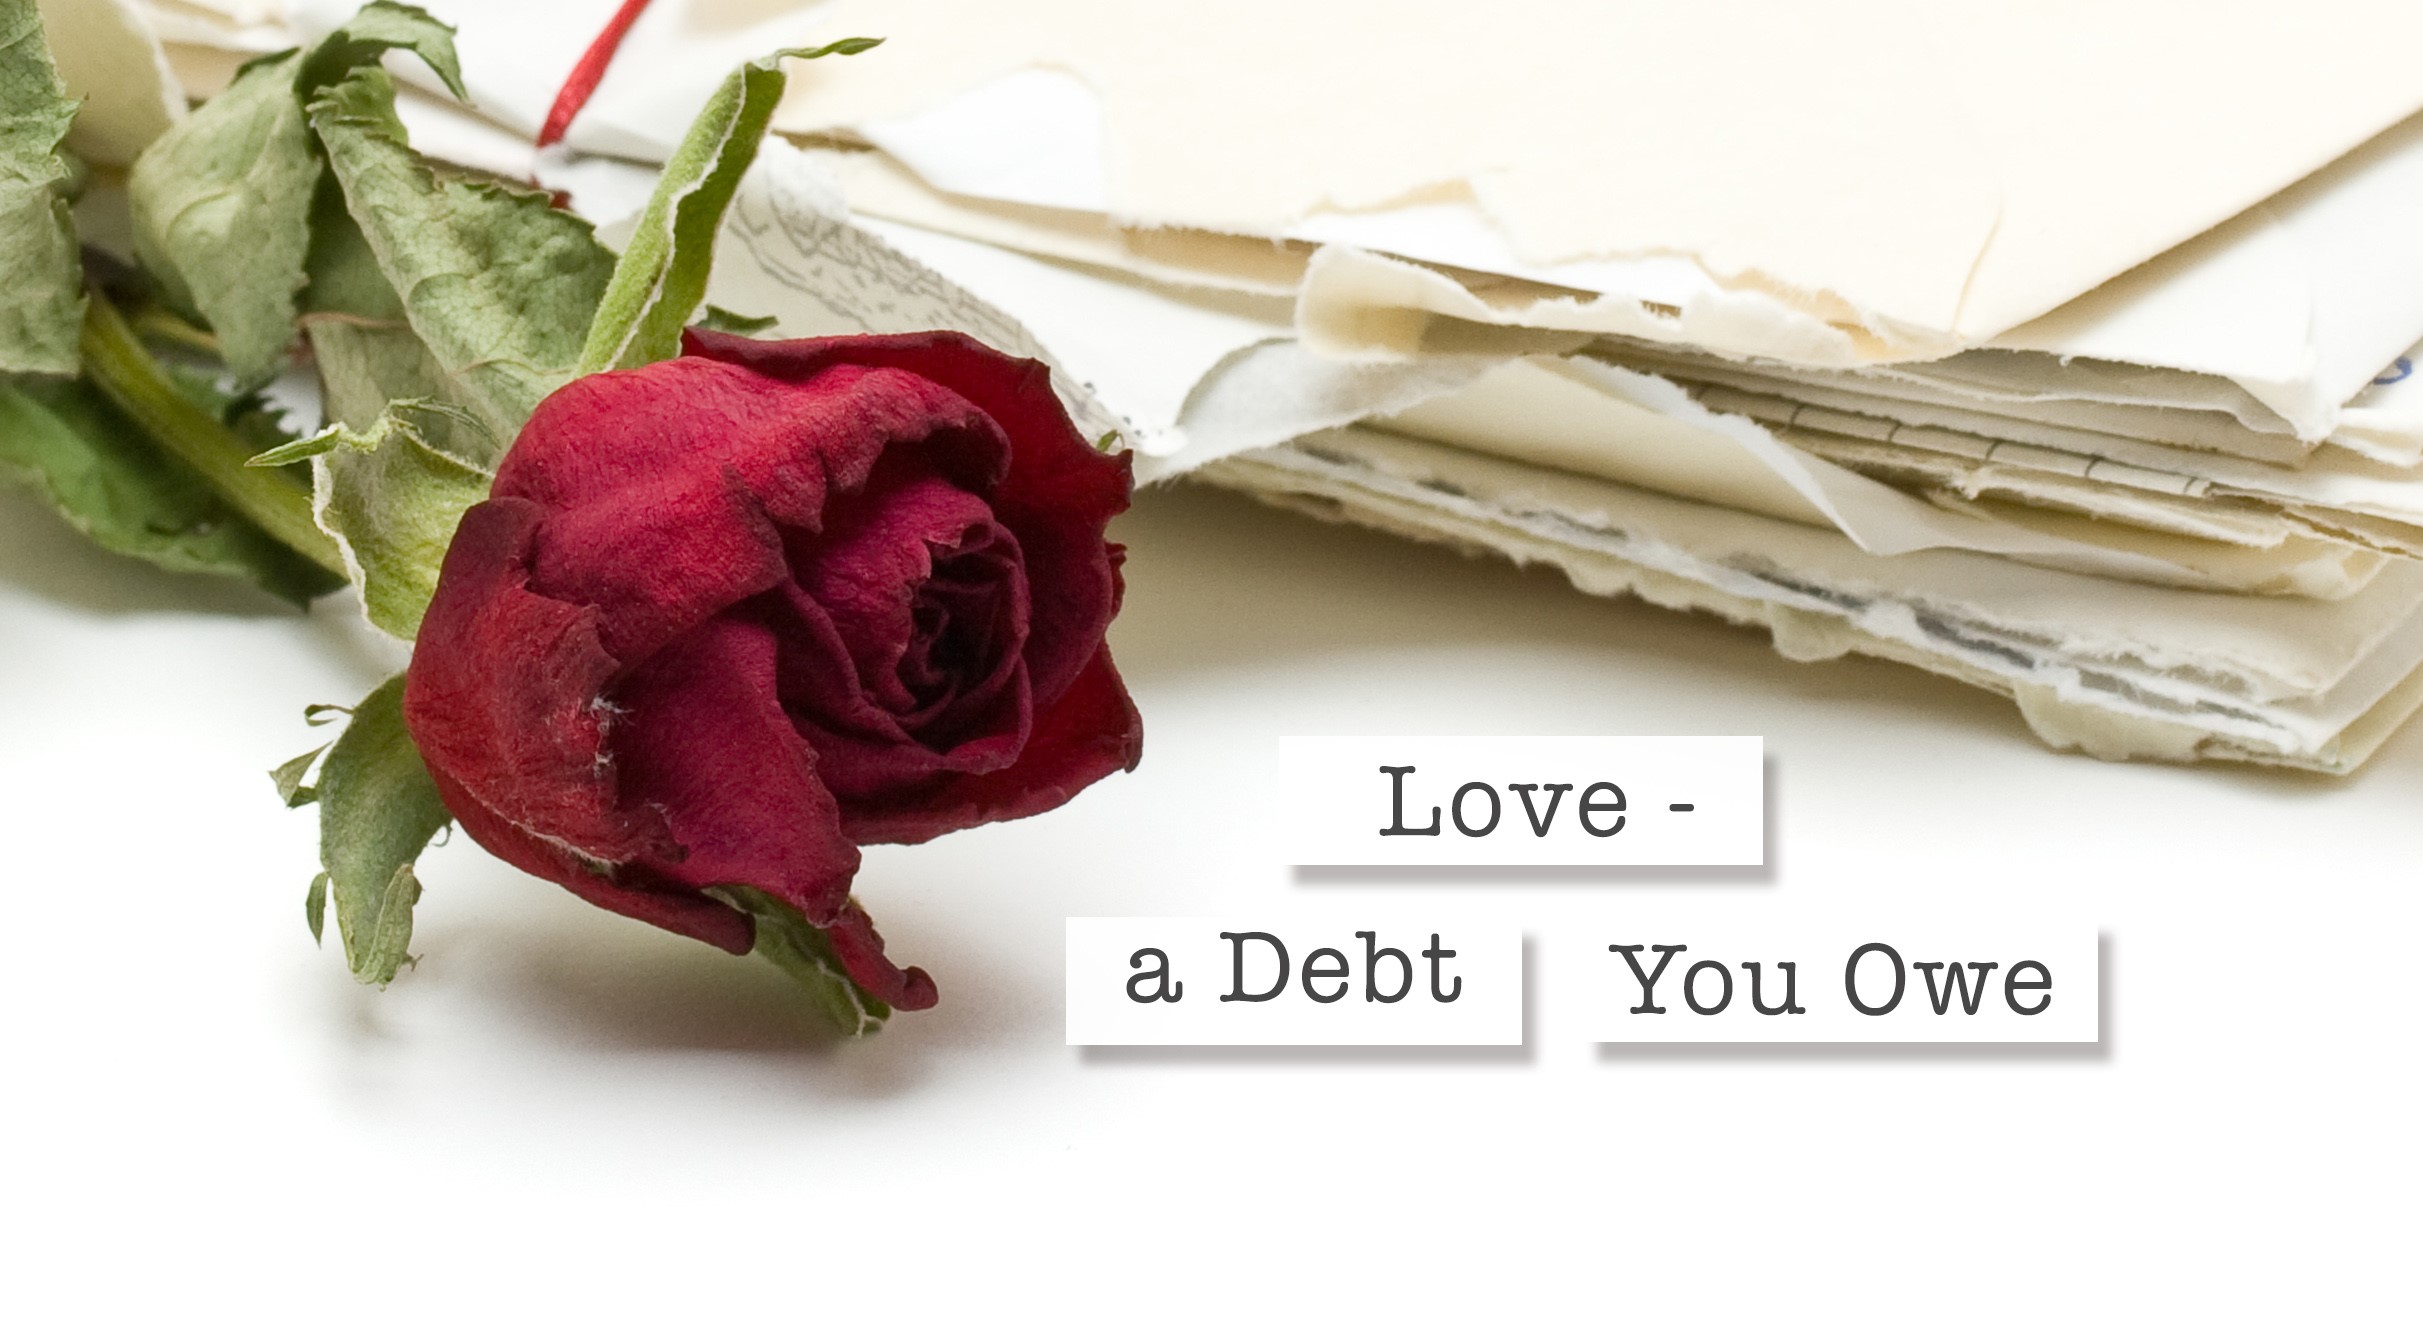 Love - A Debt You Owe